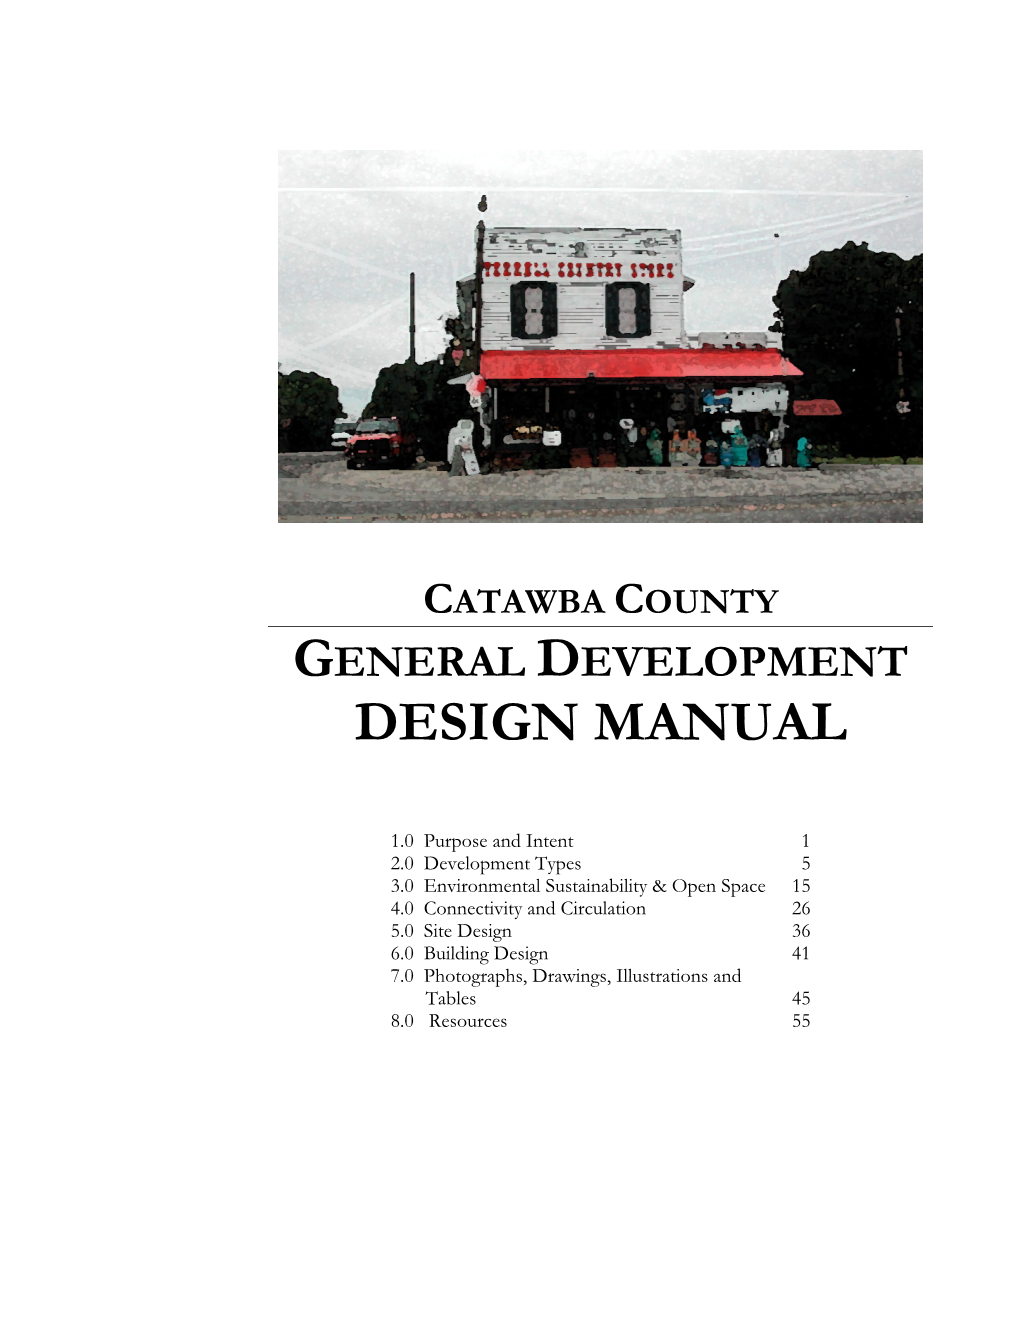 General Development Design Manual